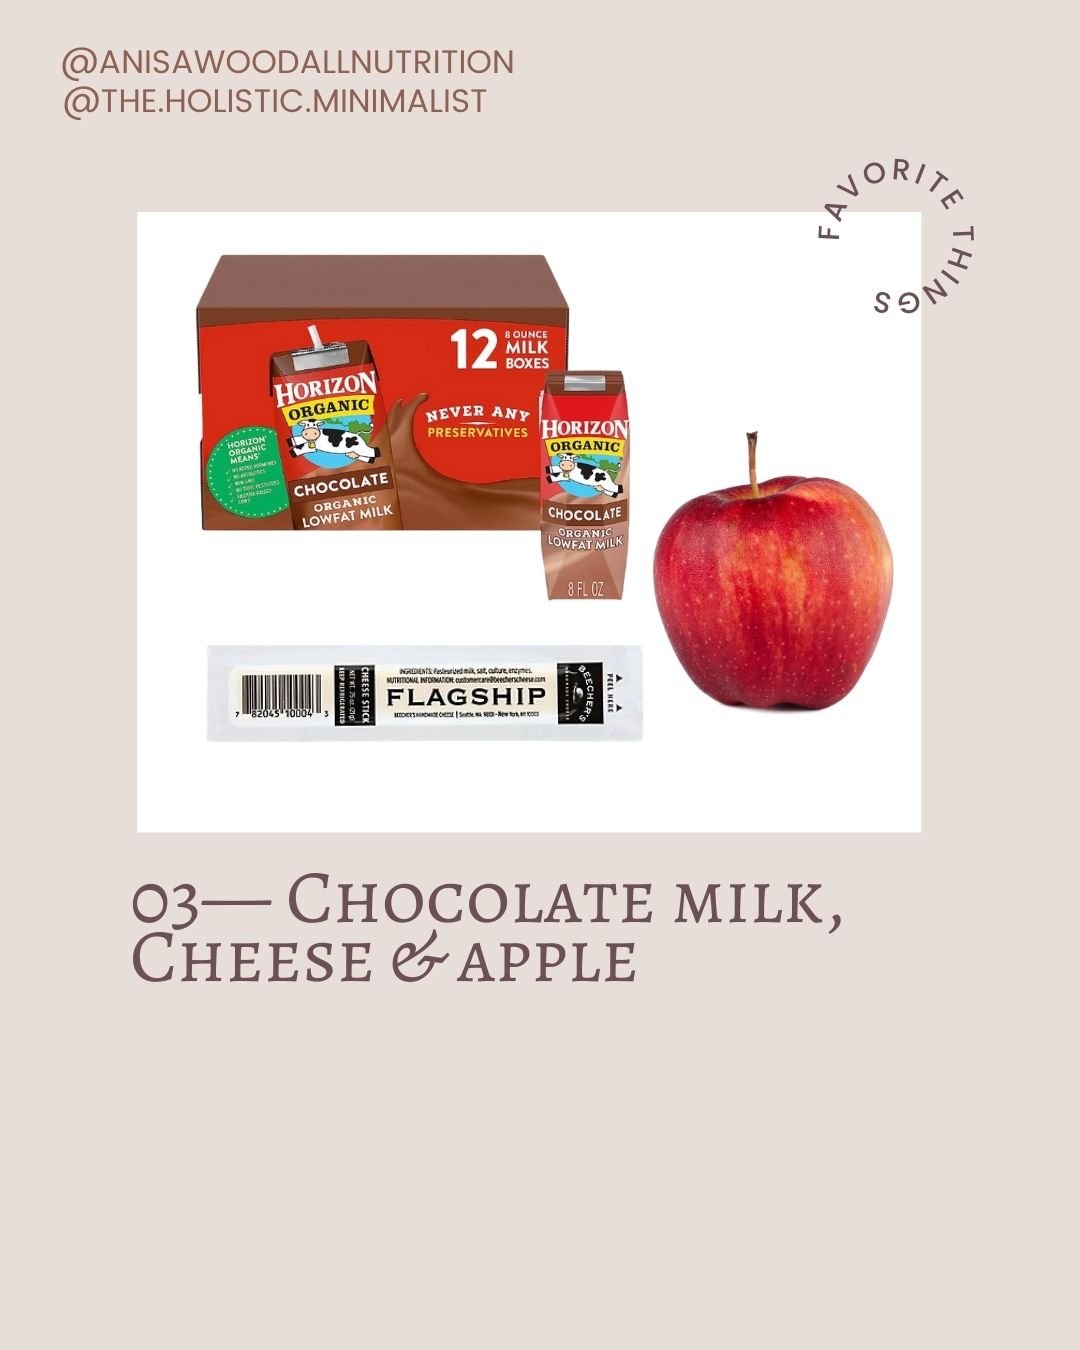 Chocolate milk, cheese and apple